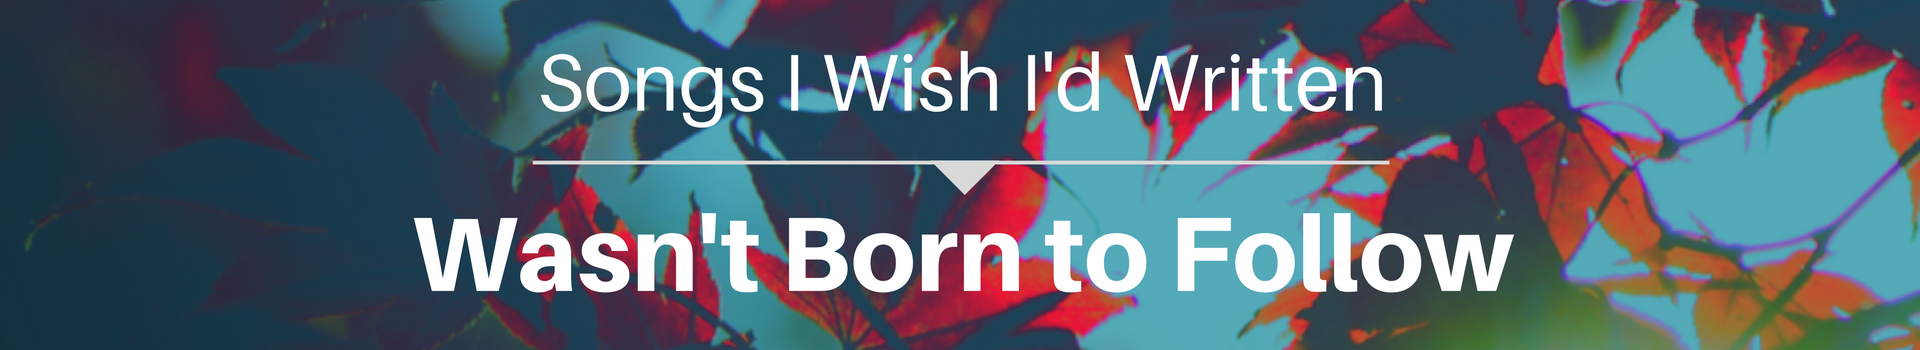 Songs I Wish I'd Written: Wasn't Born to Follow